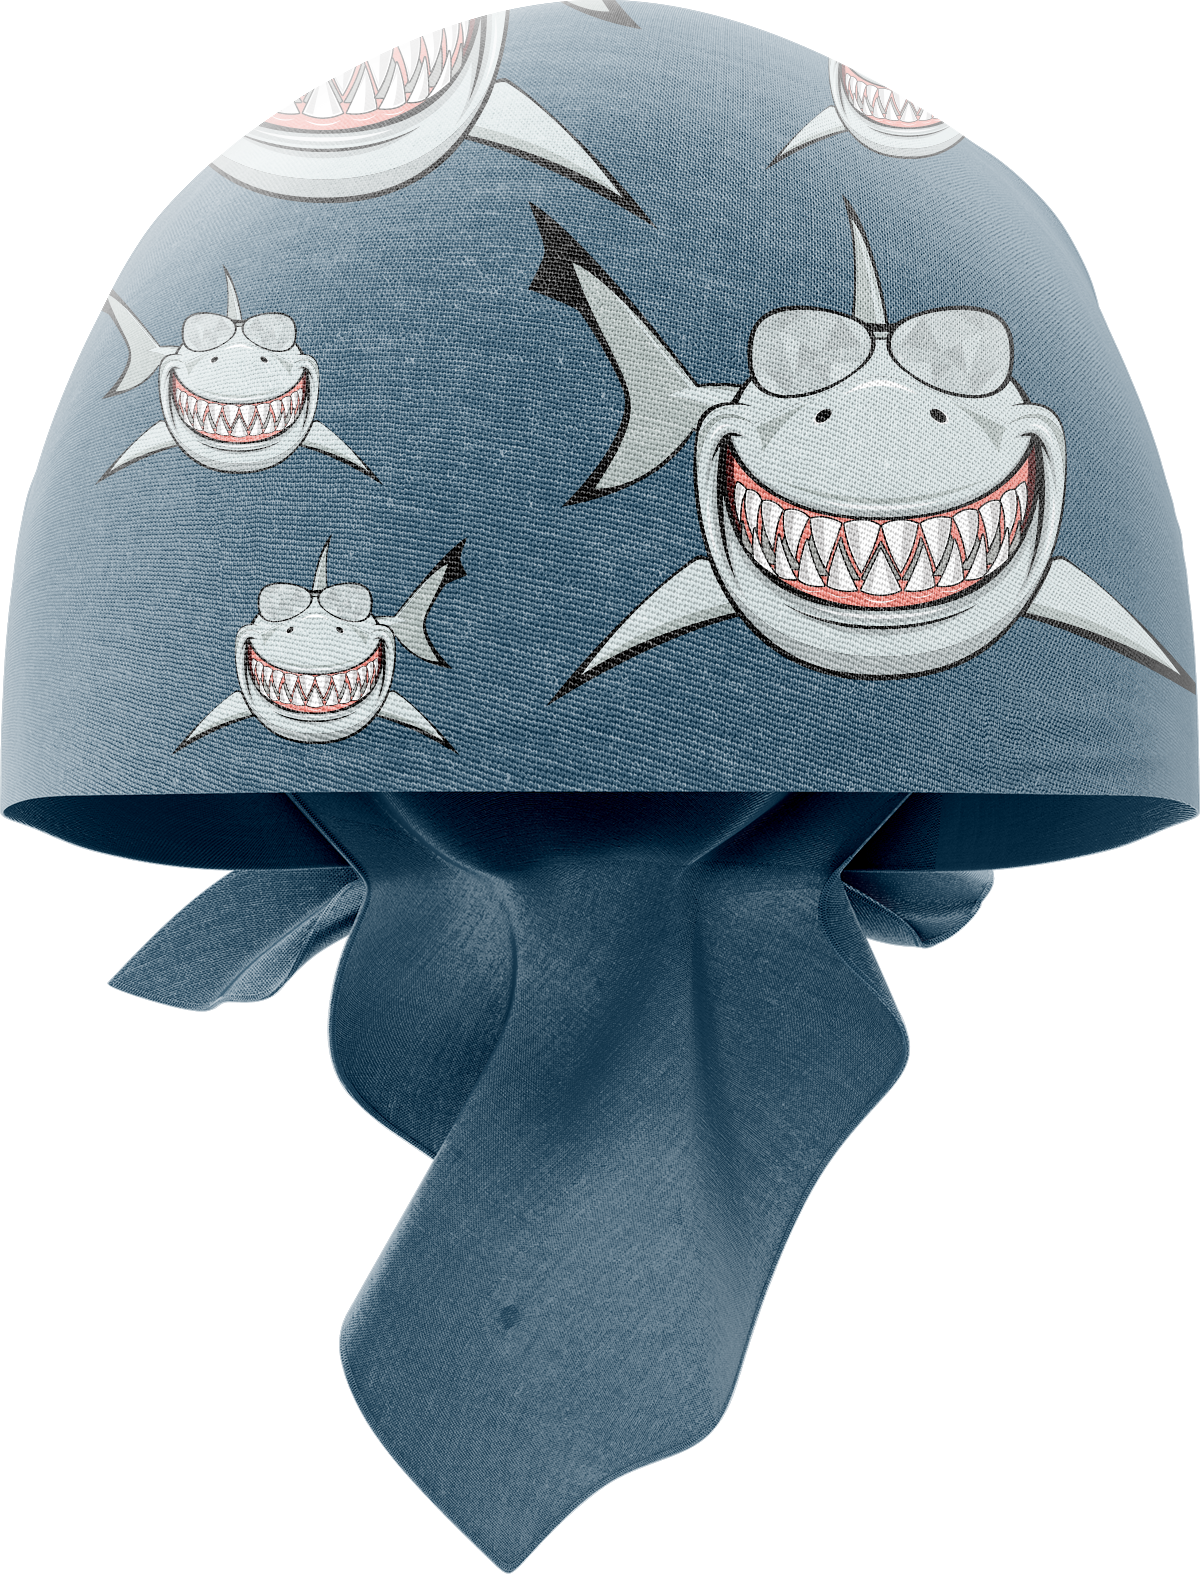 Snazzy Shark Bandannas